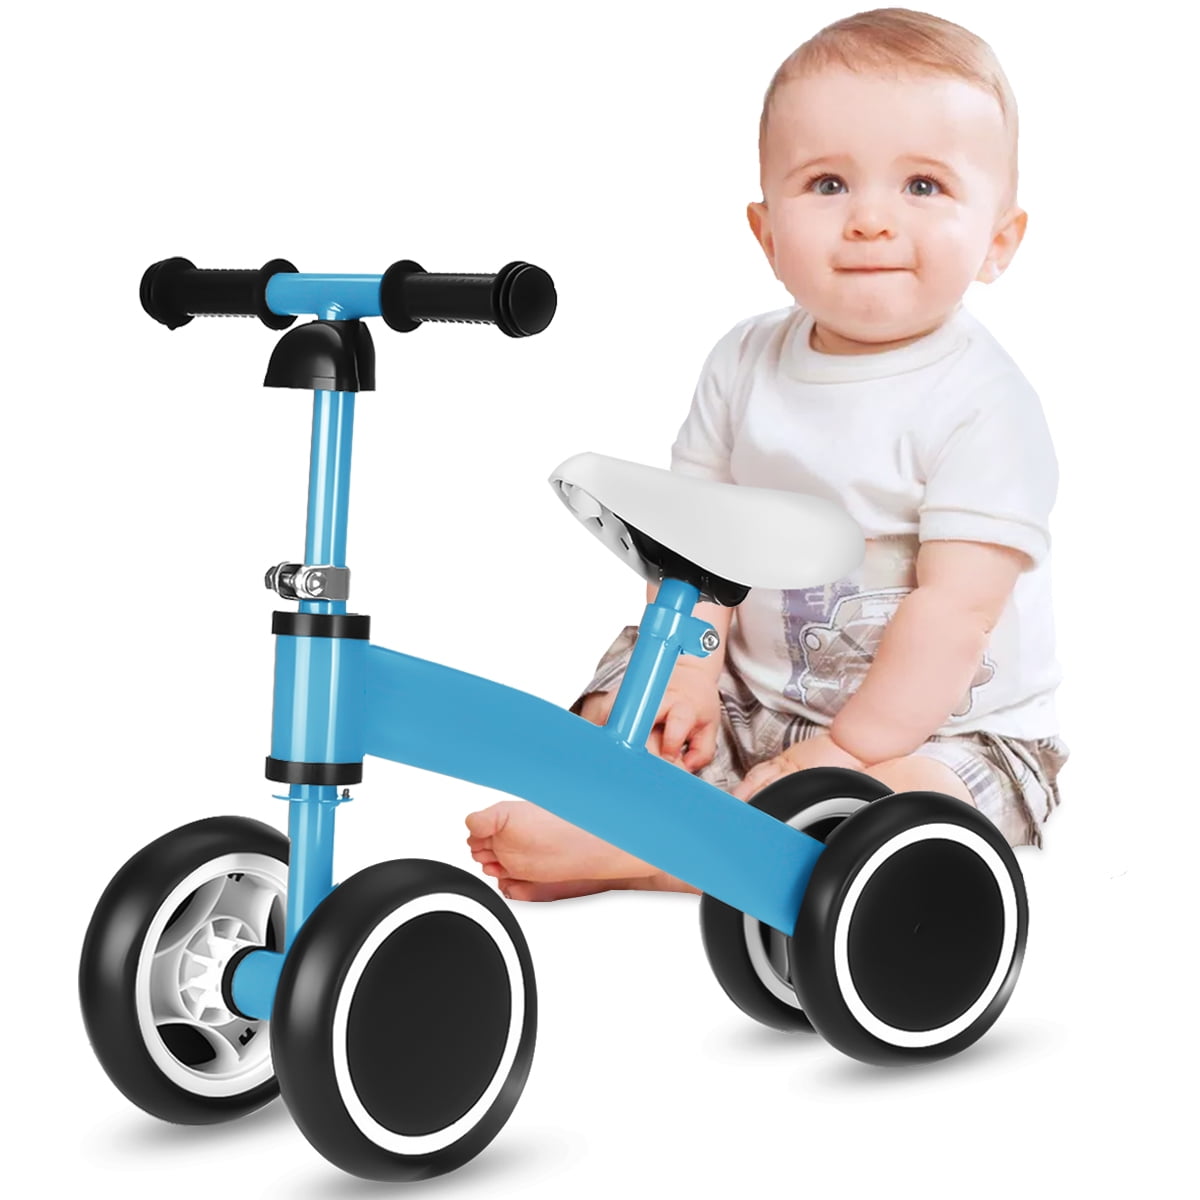 Details about   Kids Adjustable Toddler Balance Bike Beginner Rider Push No-Pedal Child Training 